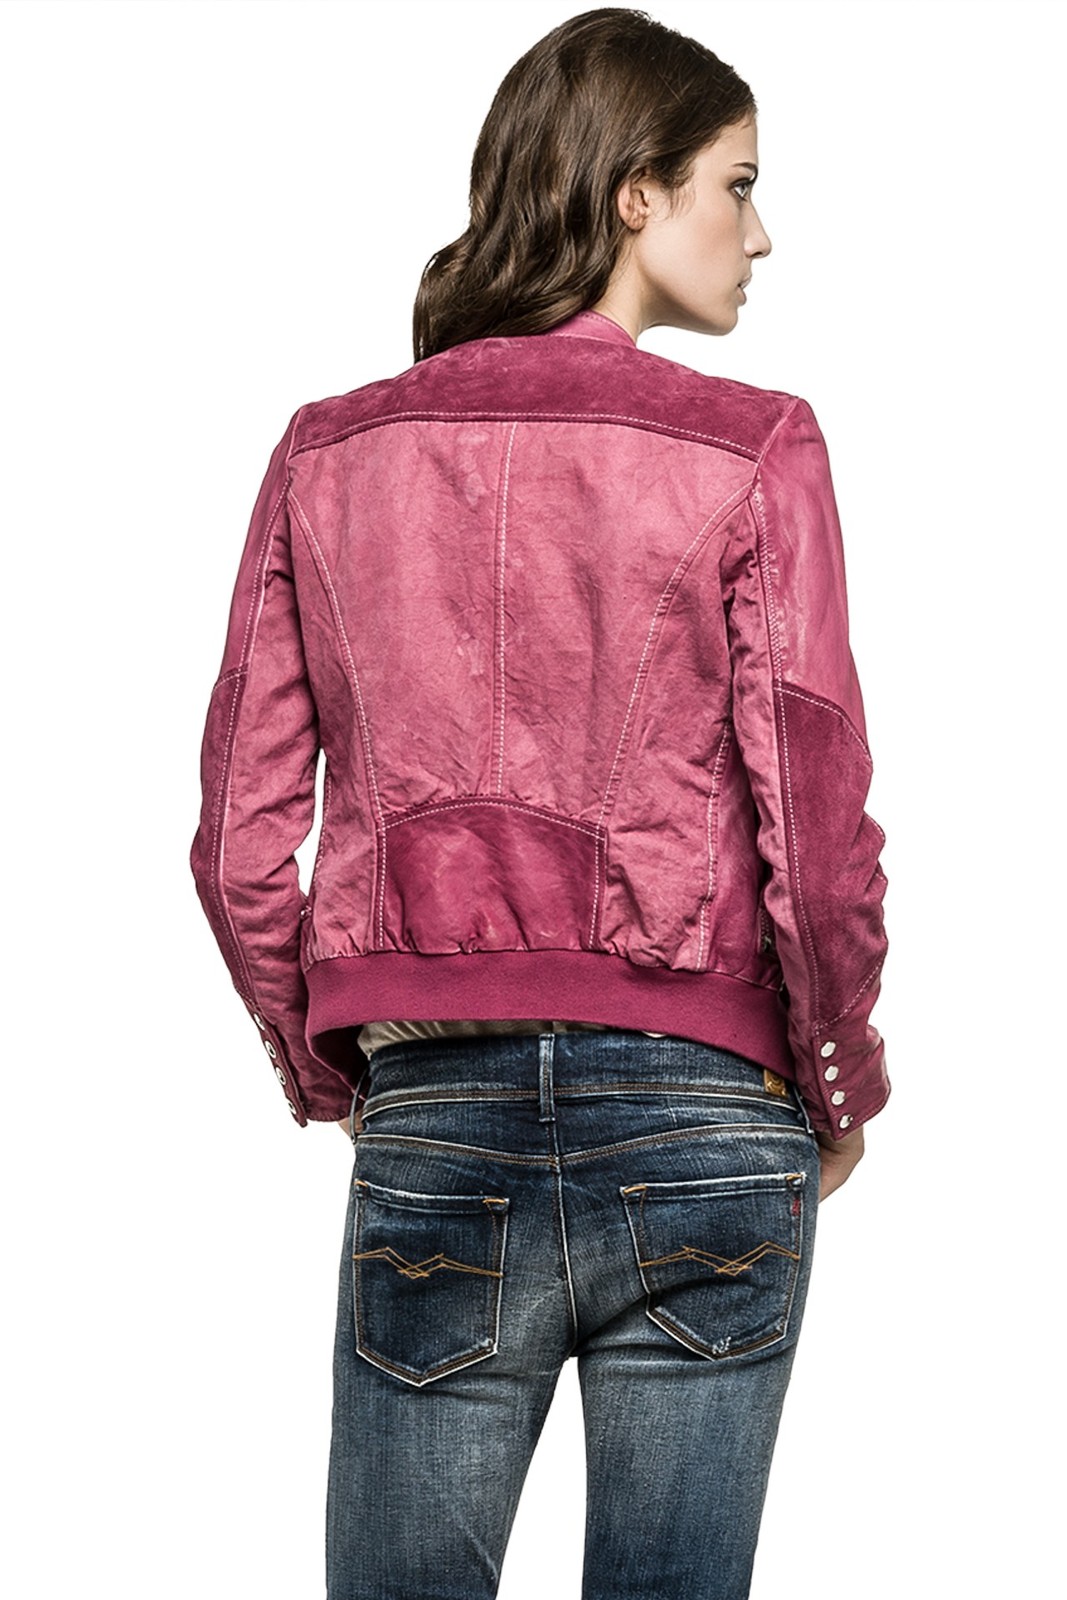 Replay női bőr motoros dzseki 2015.02.28 fotója